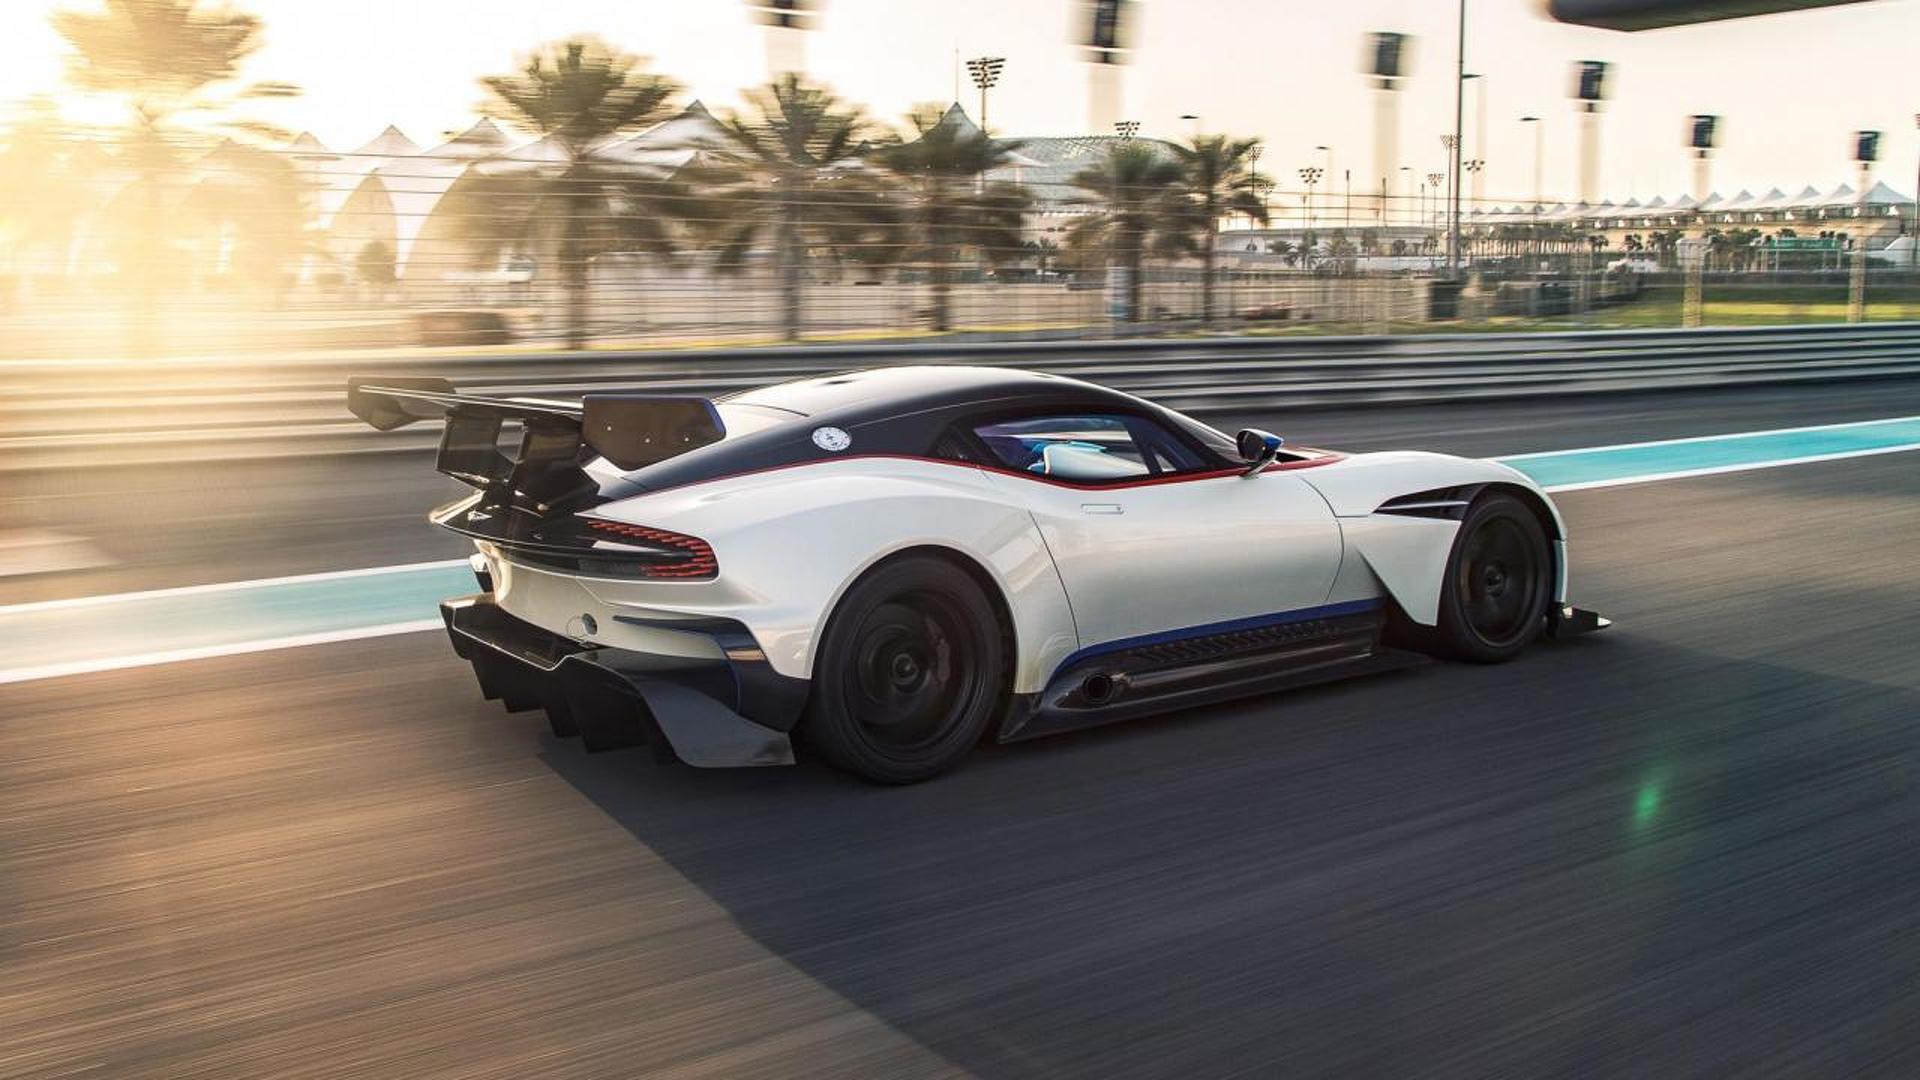 Latest Top Gear TV trailer contains Aston Martin Vulcan